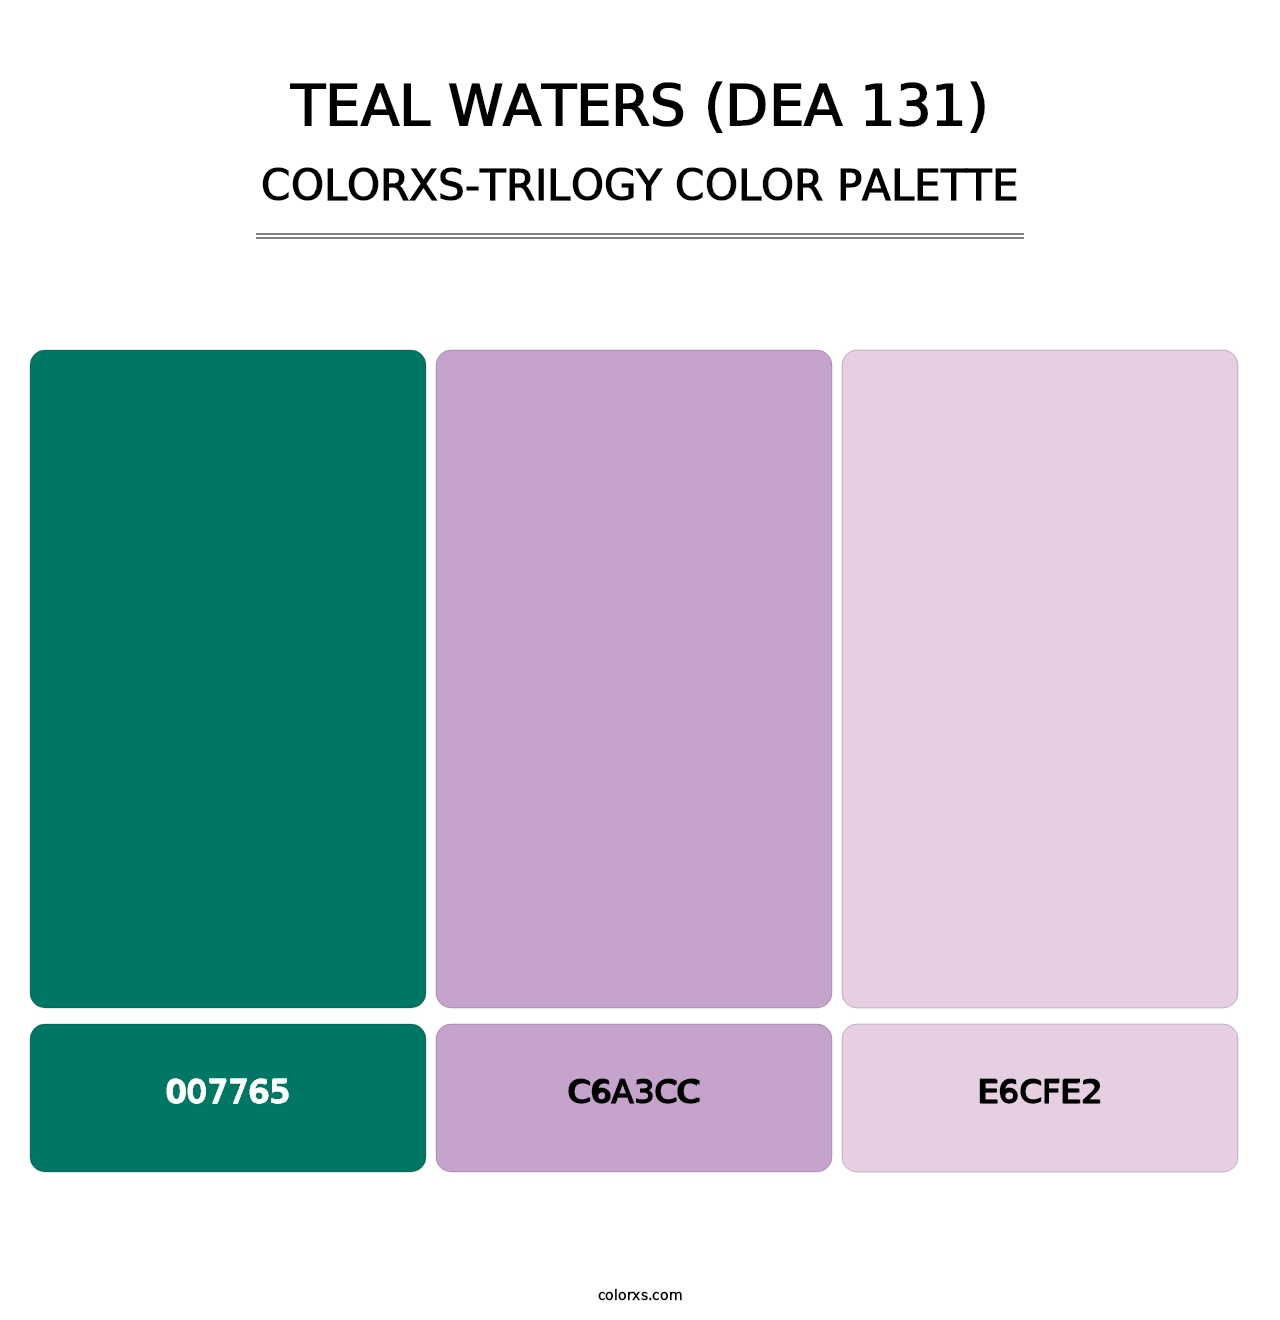 Teal Waters (DEA 131) - Colorxs Trilogy Palette